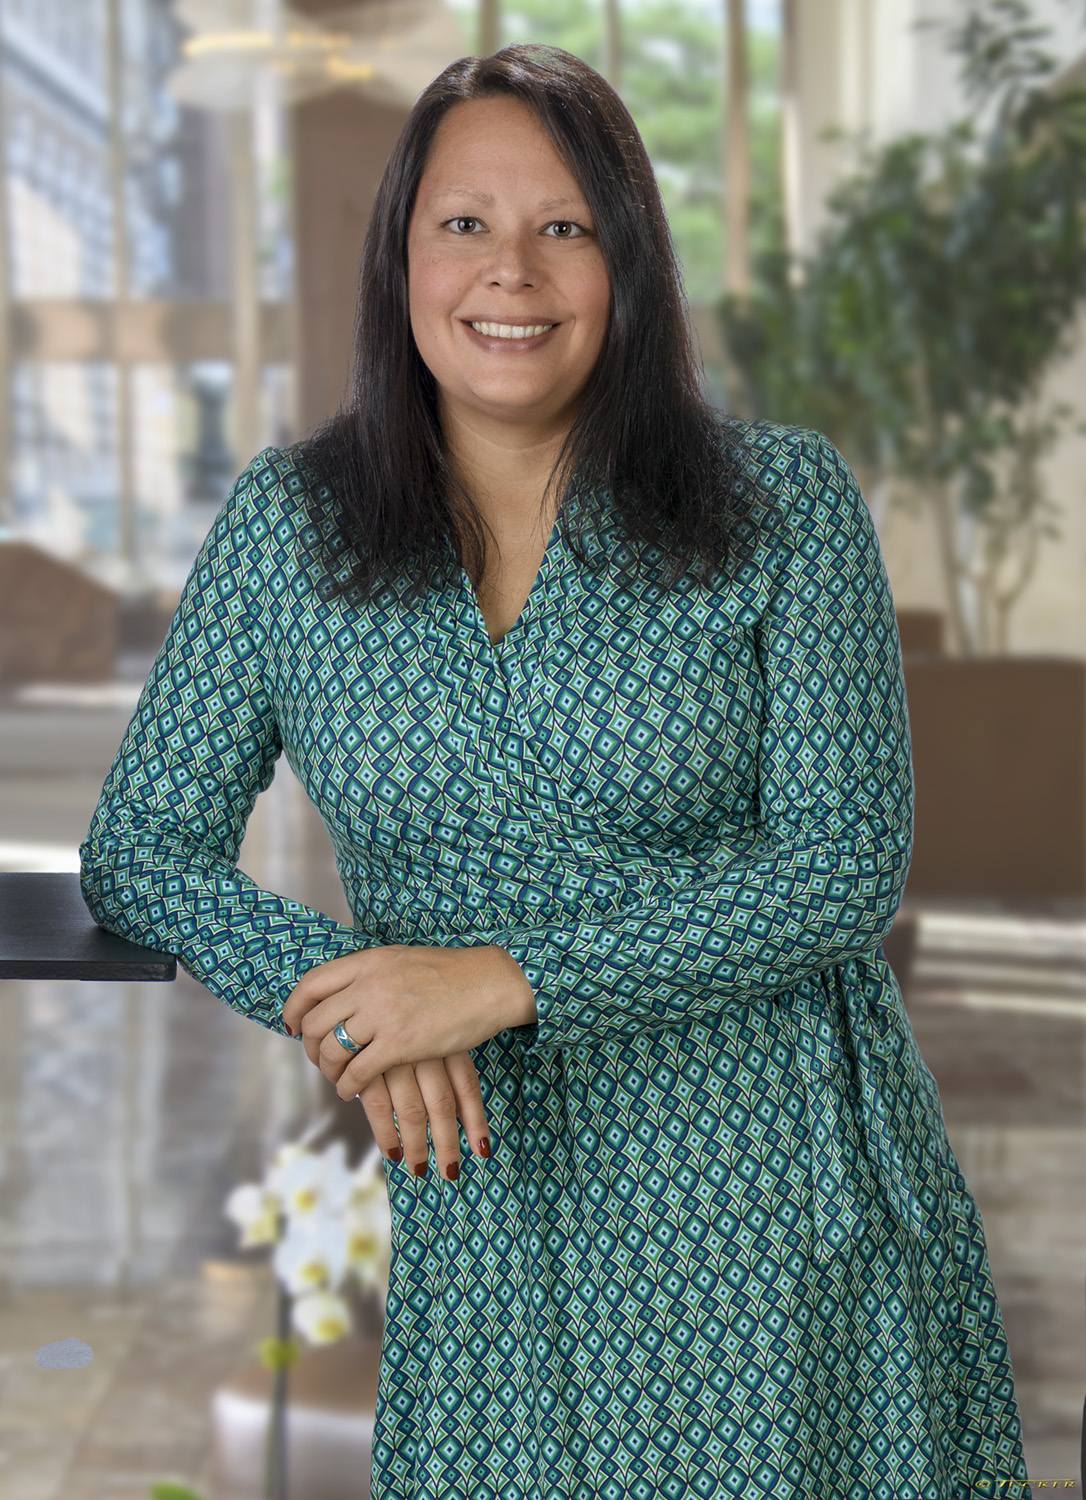 Angela Shuckahosee, Director of Resident Advocacy, Quality Assurance